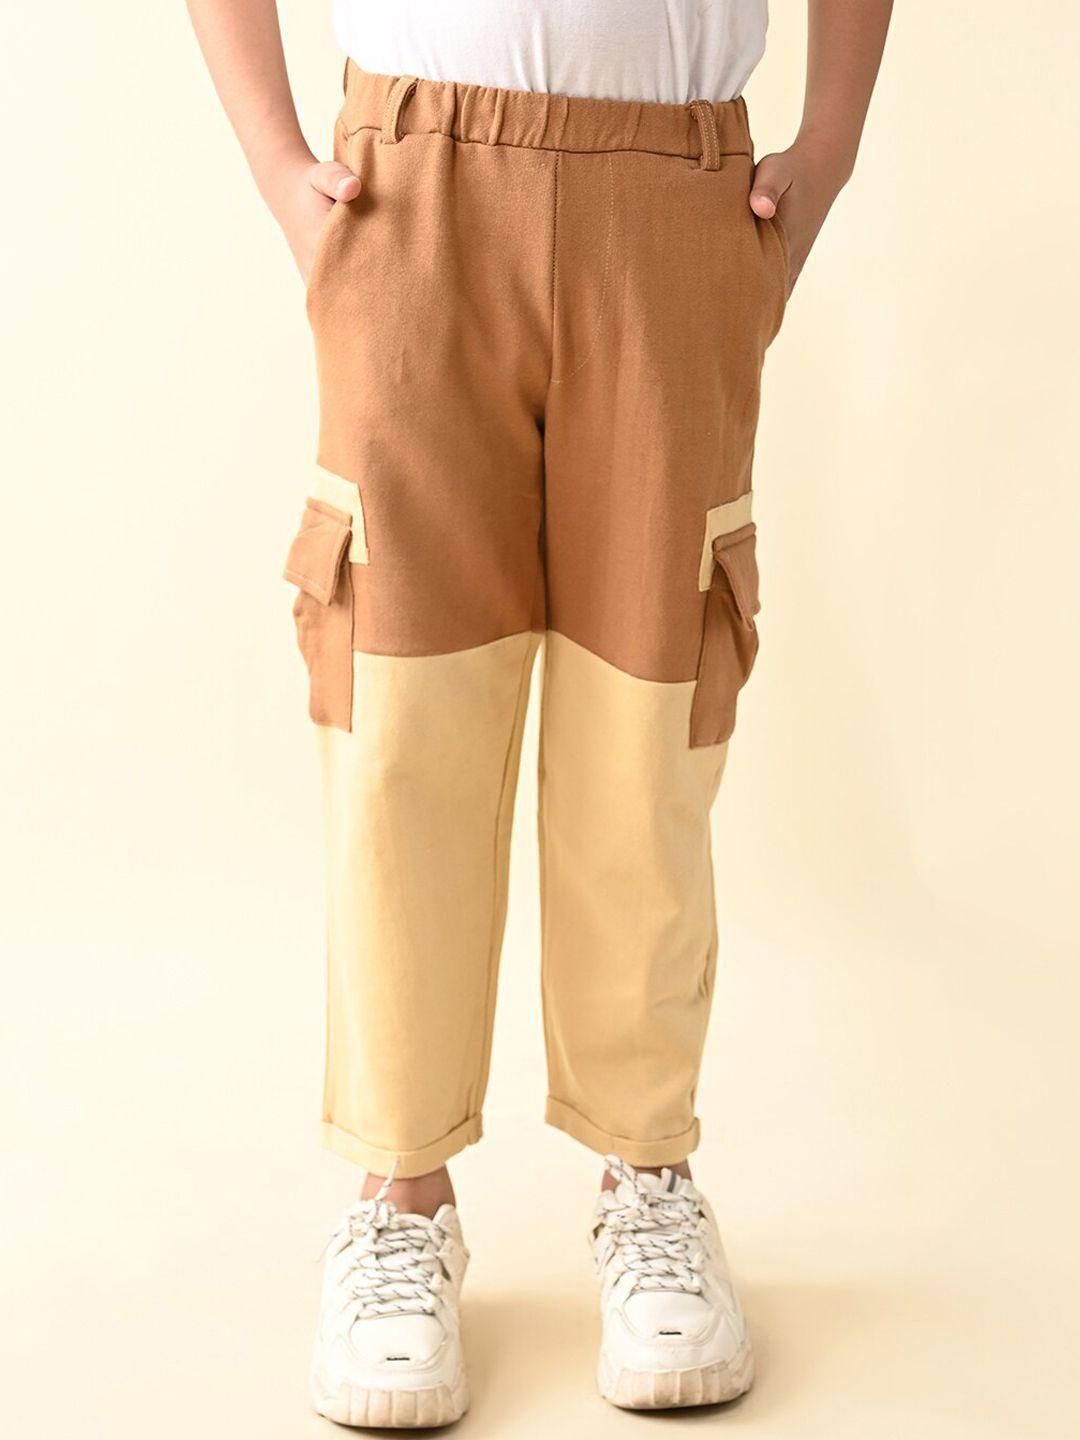 lilpicks boys colourblocked cotton track pants